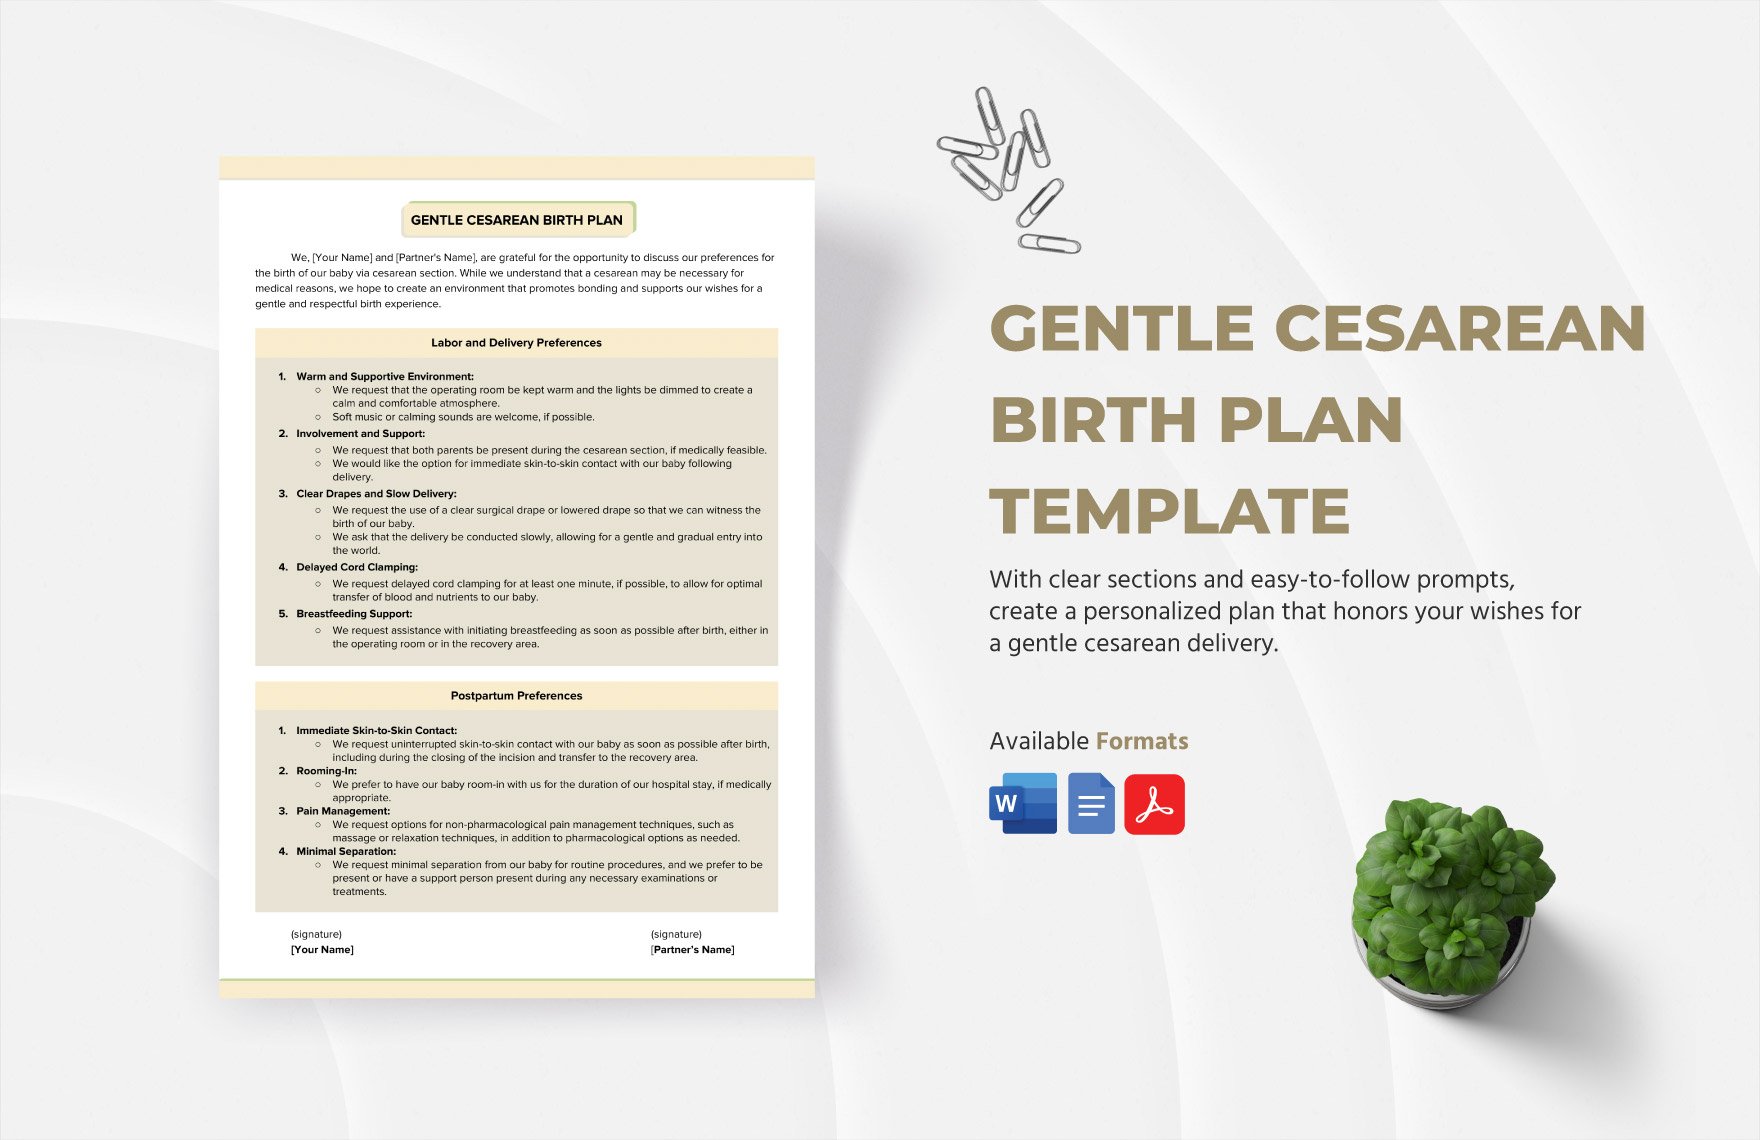 Gentle Cesarean Birth Plan Template in Word, Google Docs, PDF